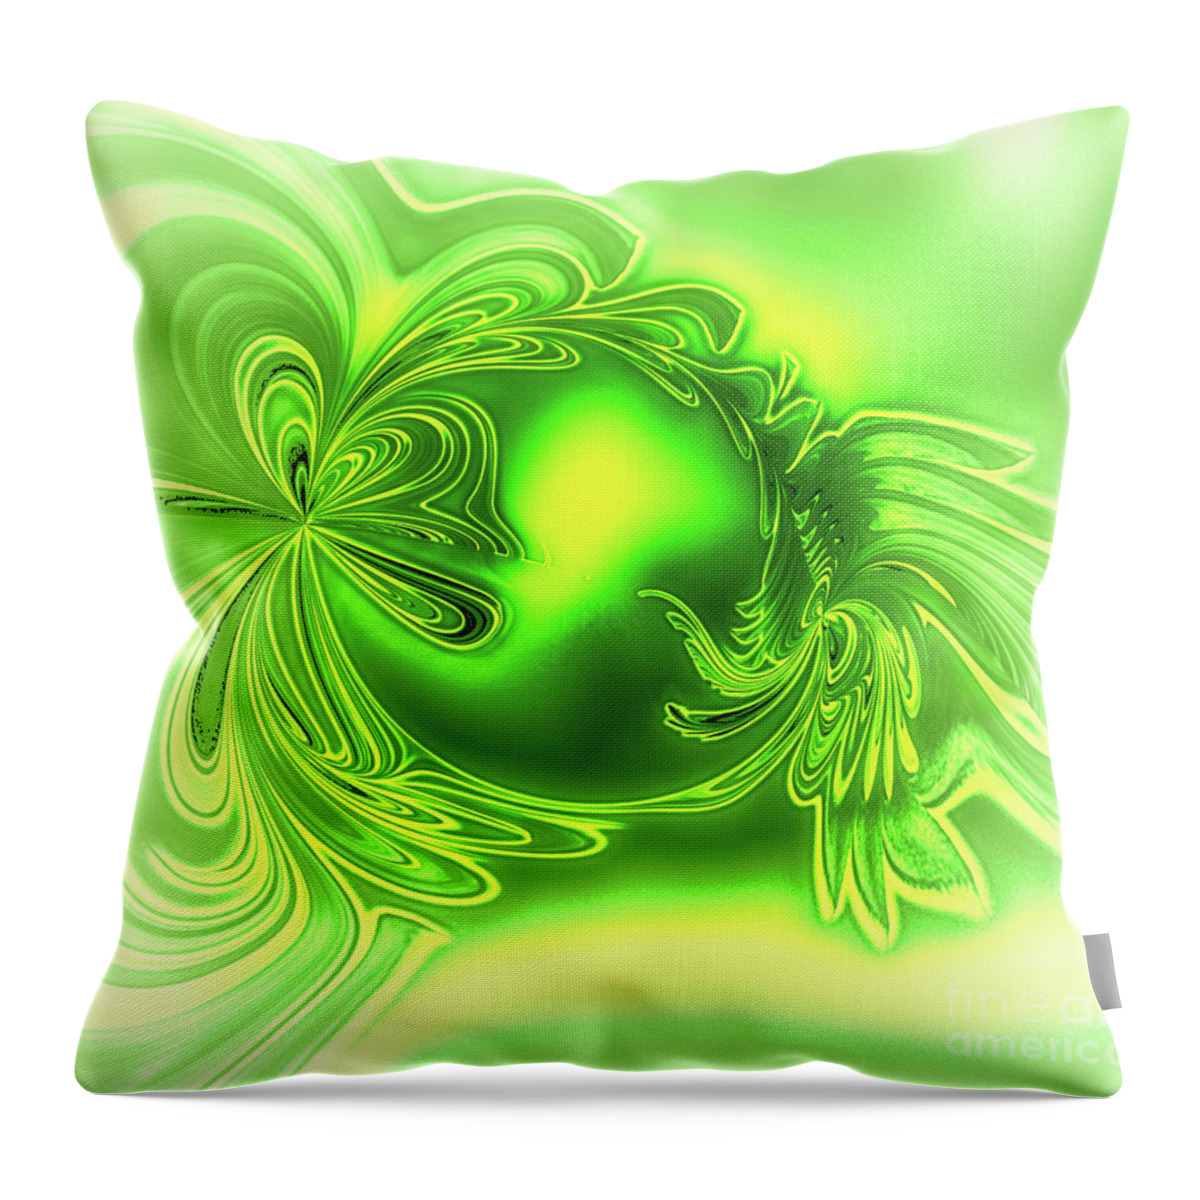 Edelstein Throw Pillow featuring the digital art Gemstone Green Tourmaline by Eva-Maria Di Bella